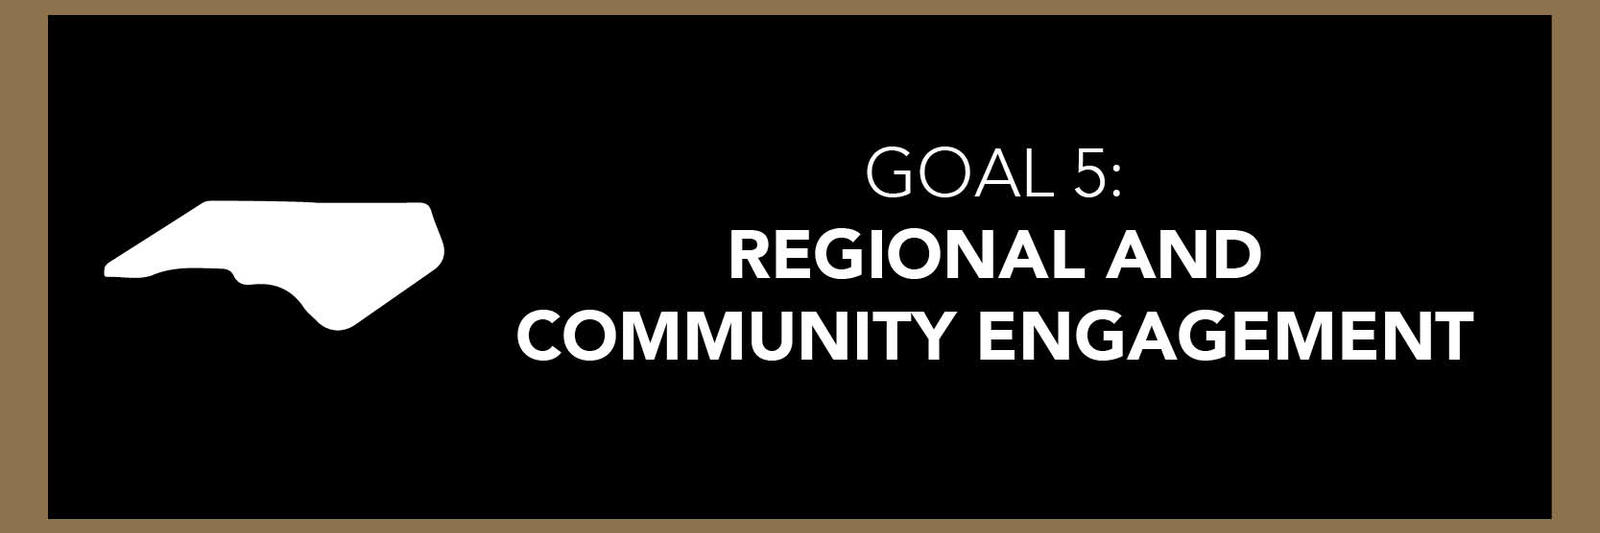 Goal 5 Regional and community engagement